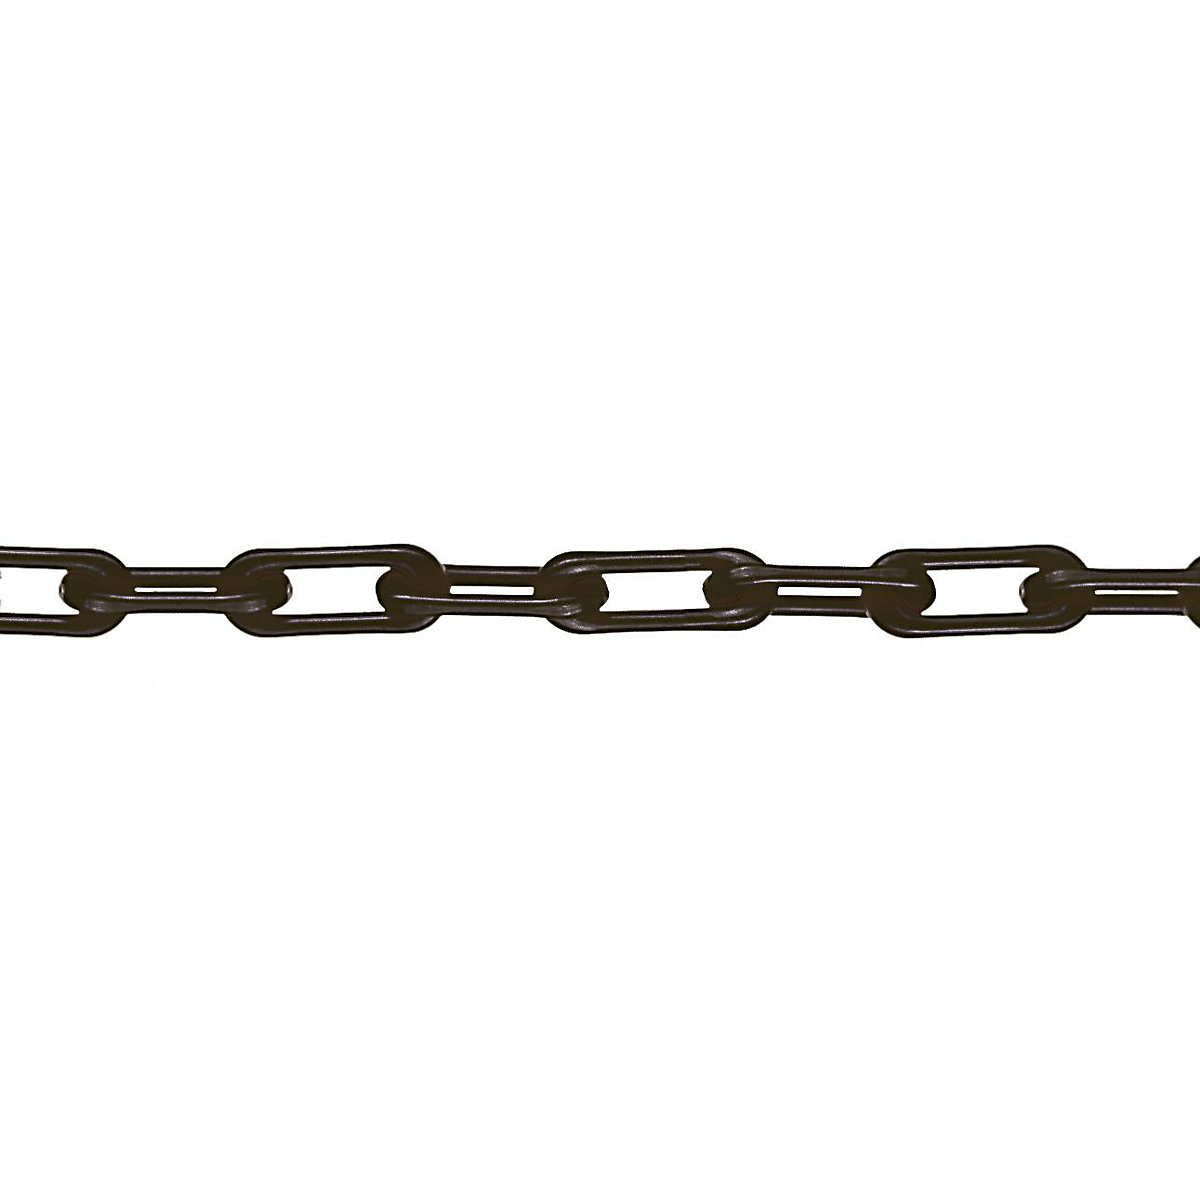 Nylon chain, MNK quality standard 6, band length 50 m, black-6